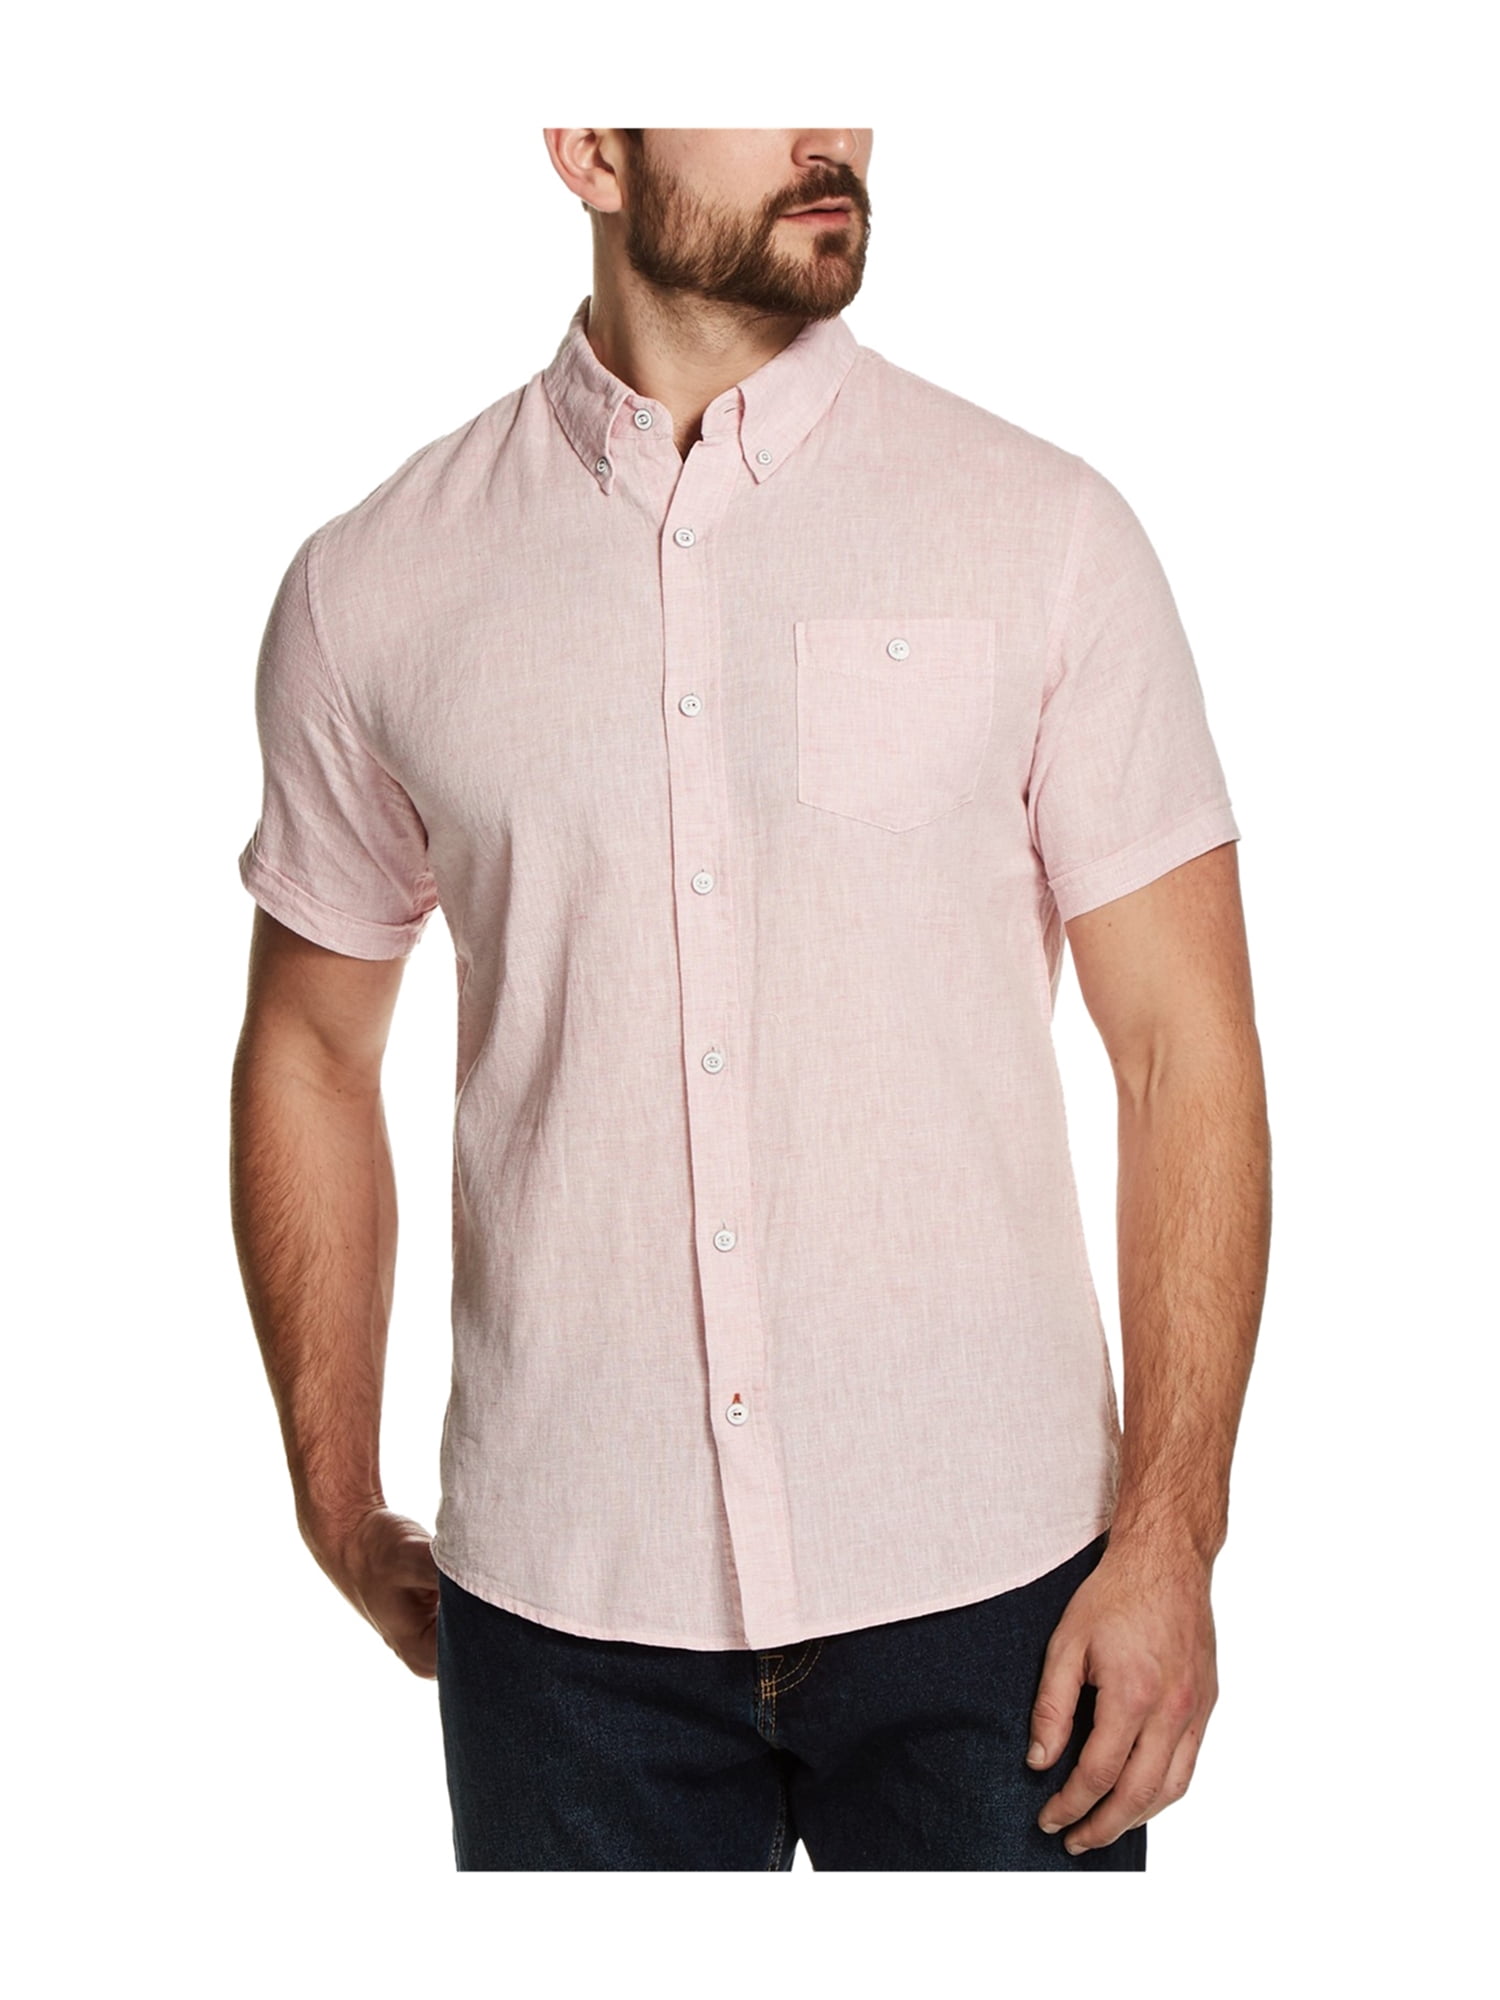 Weatherproof Mens Solid Button Up Shirt blush S | Walmart Canada